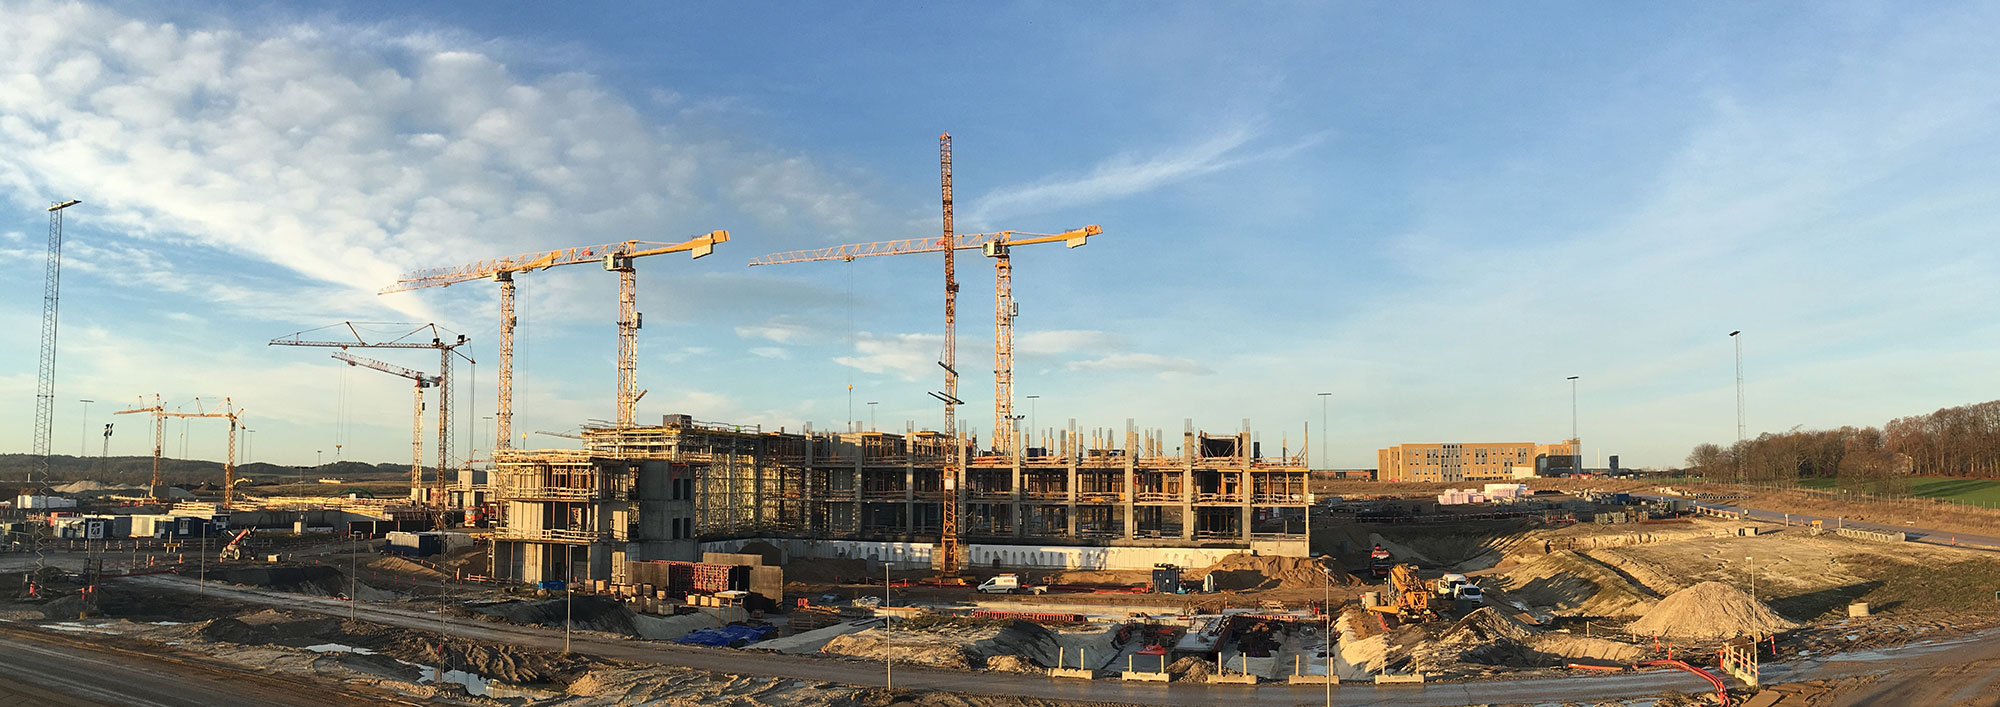 A new super hospital under construction in Denmark.